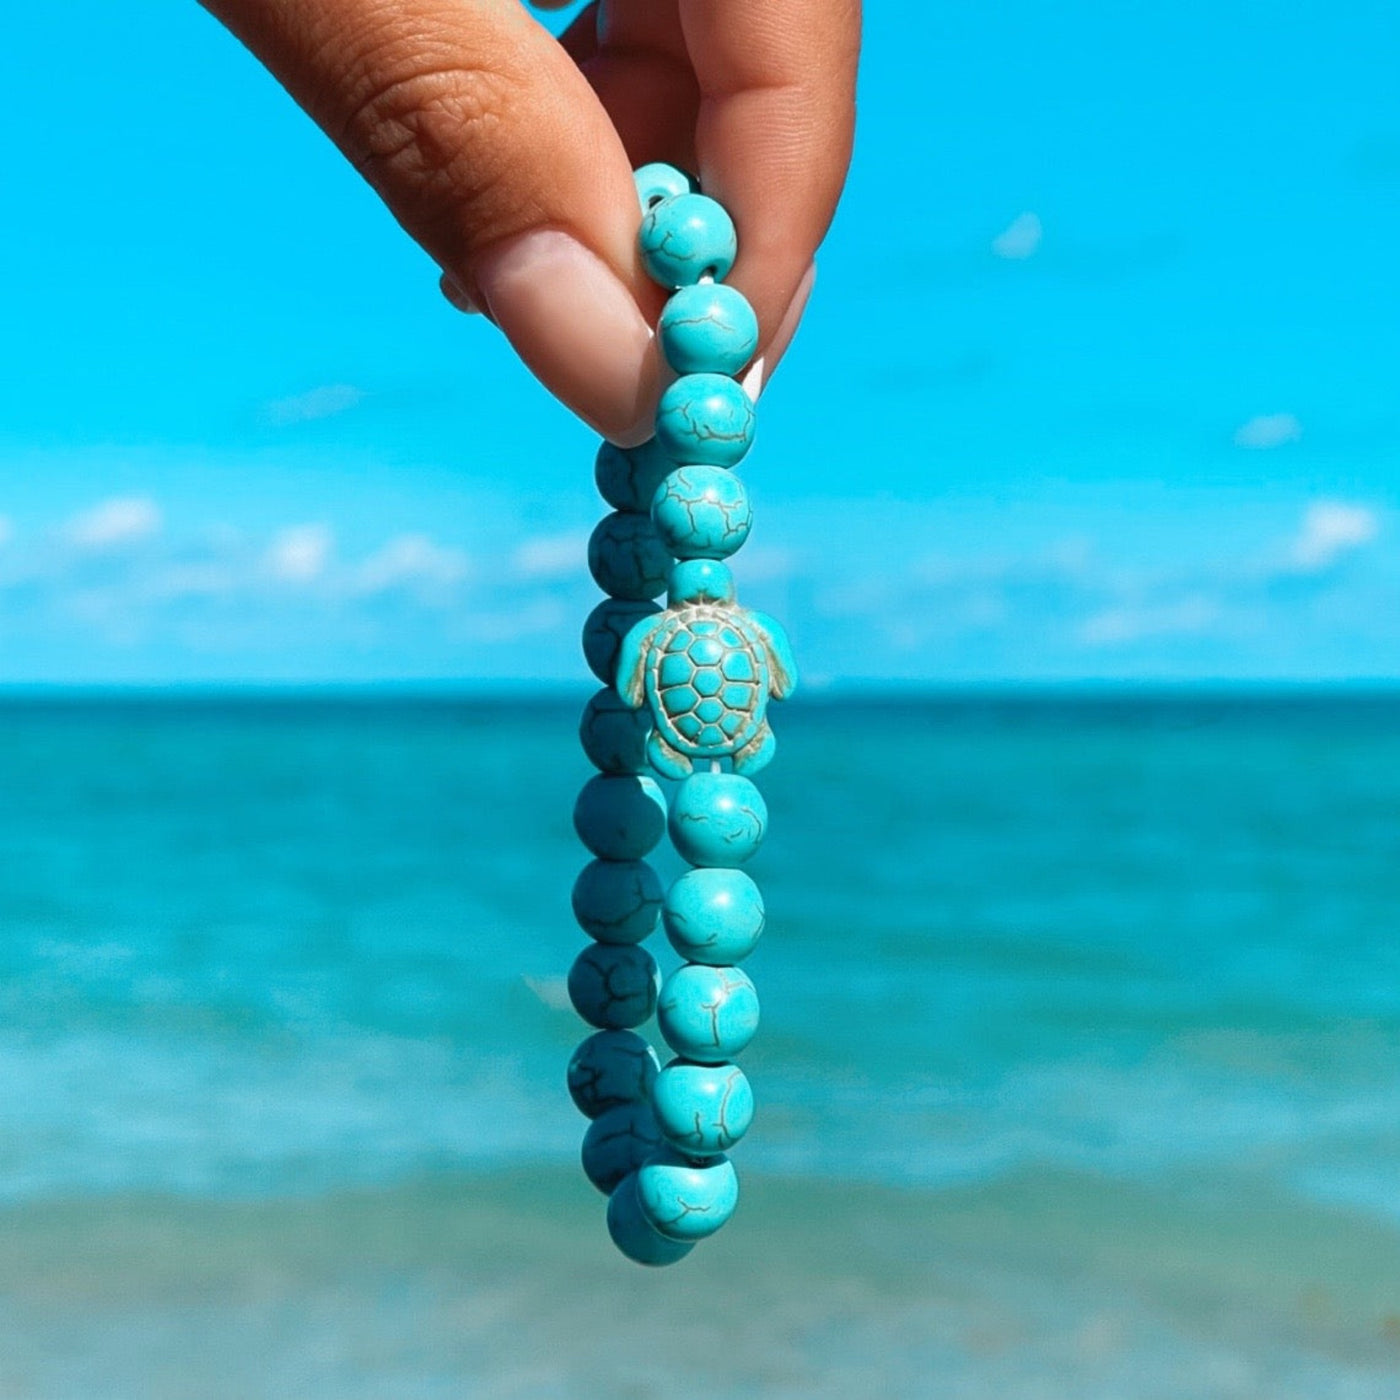 Turquoise Sea Turtle Stone Bracelet